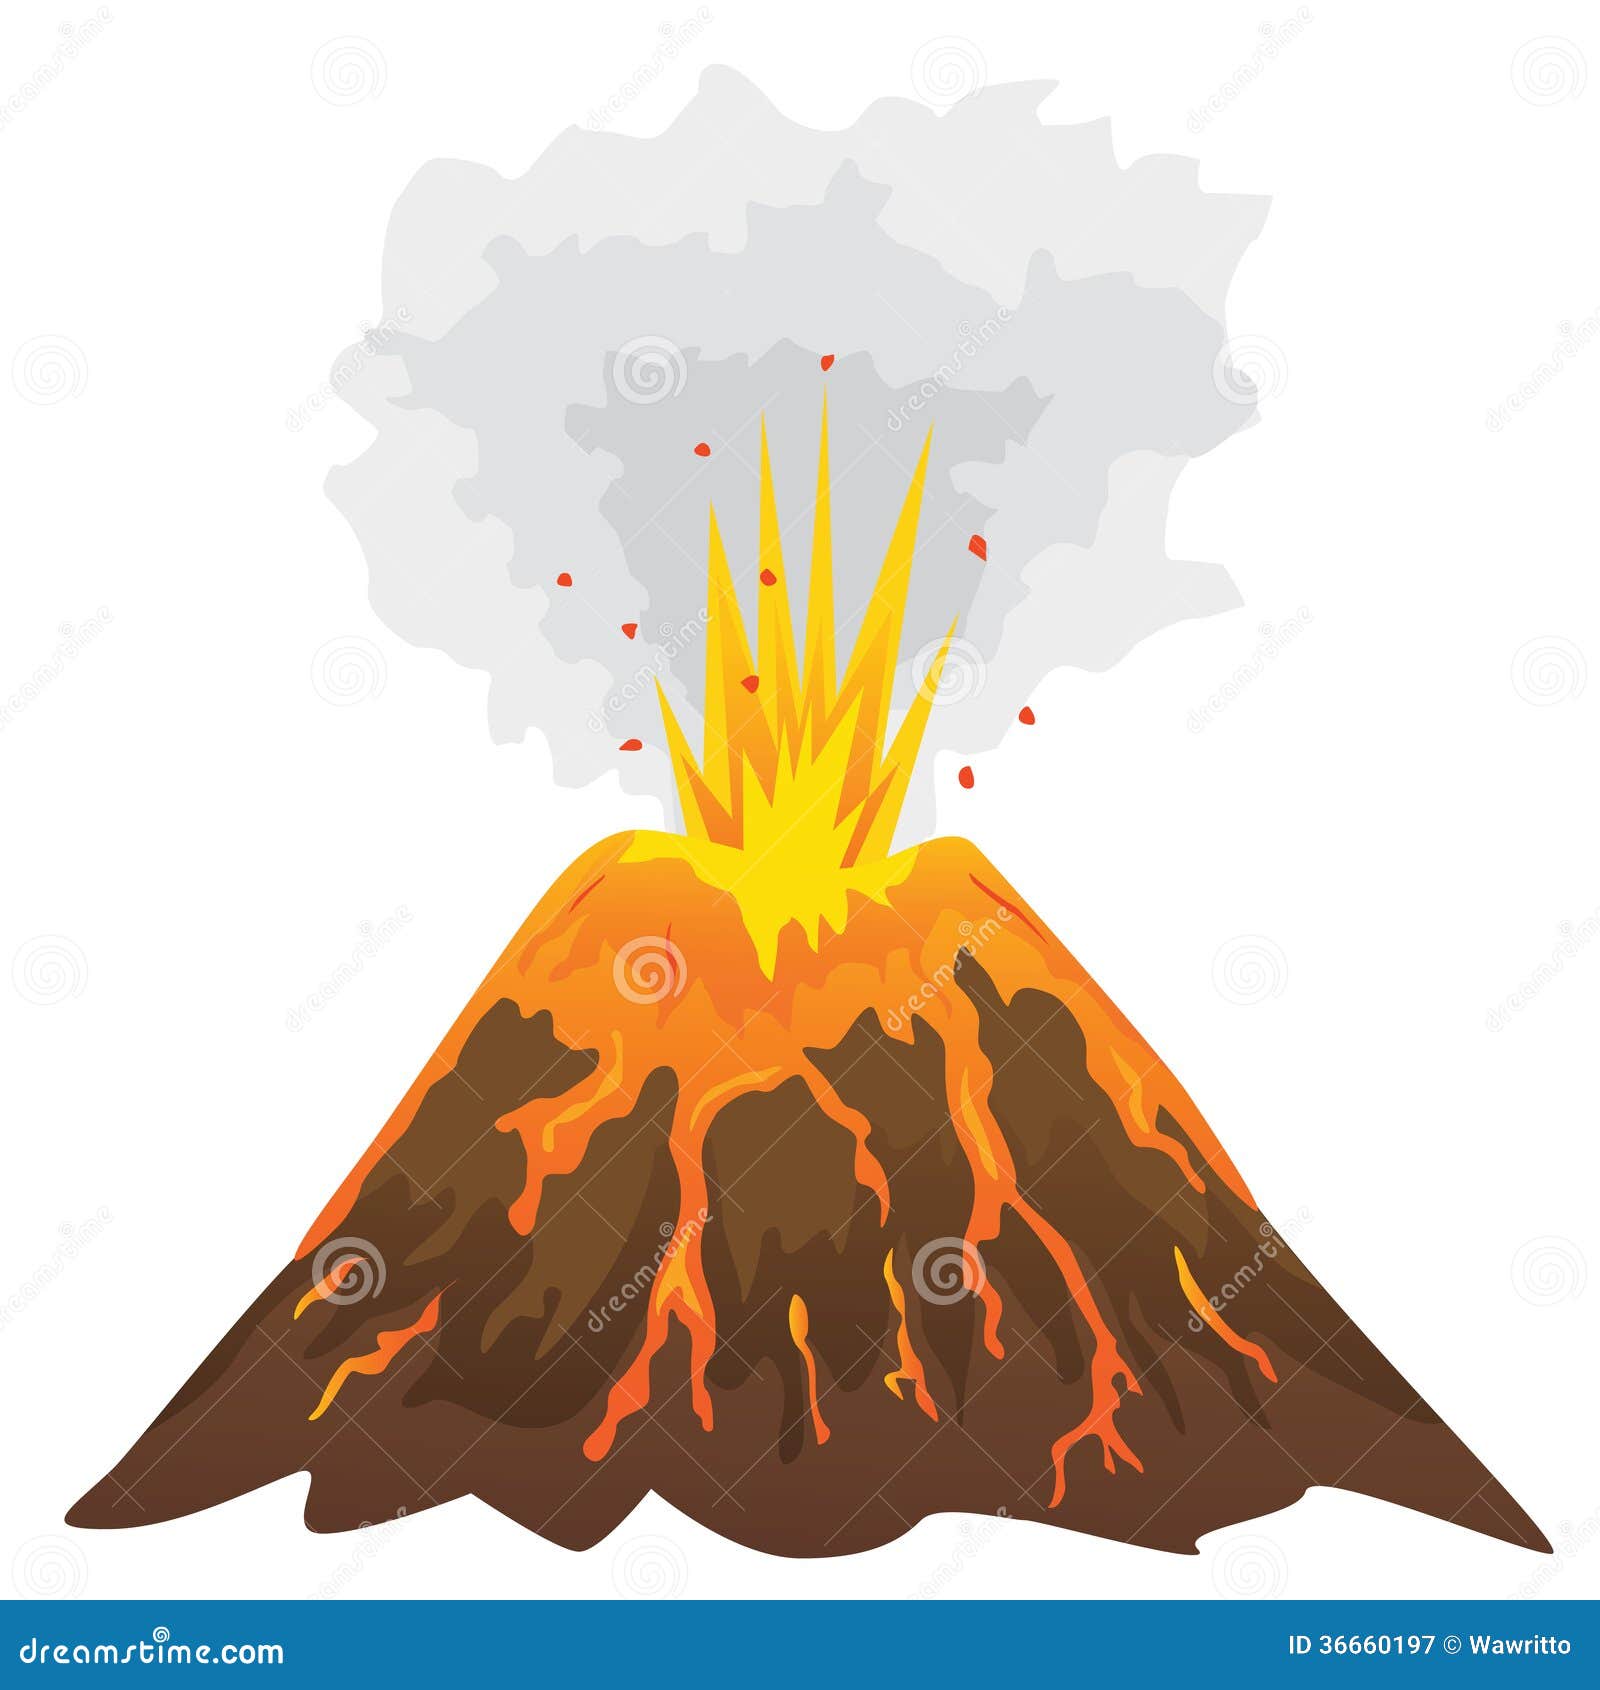 clipart volcano erupting - photo #46